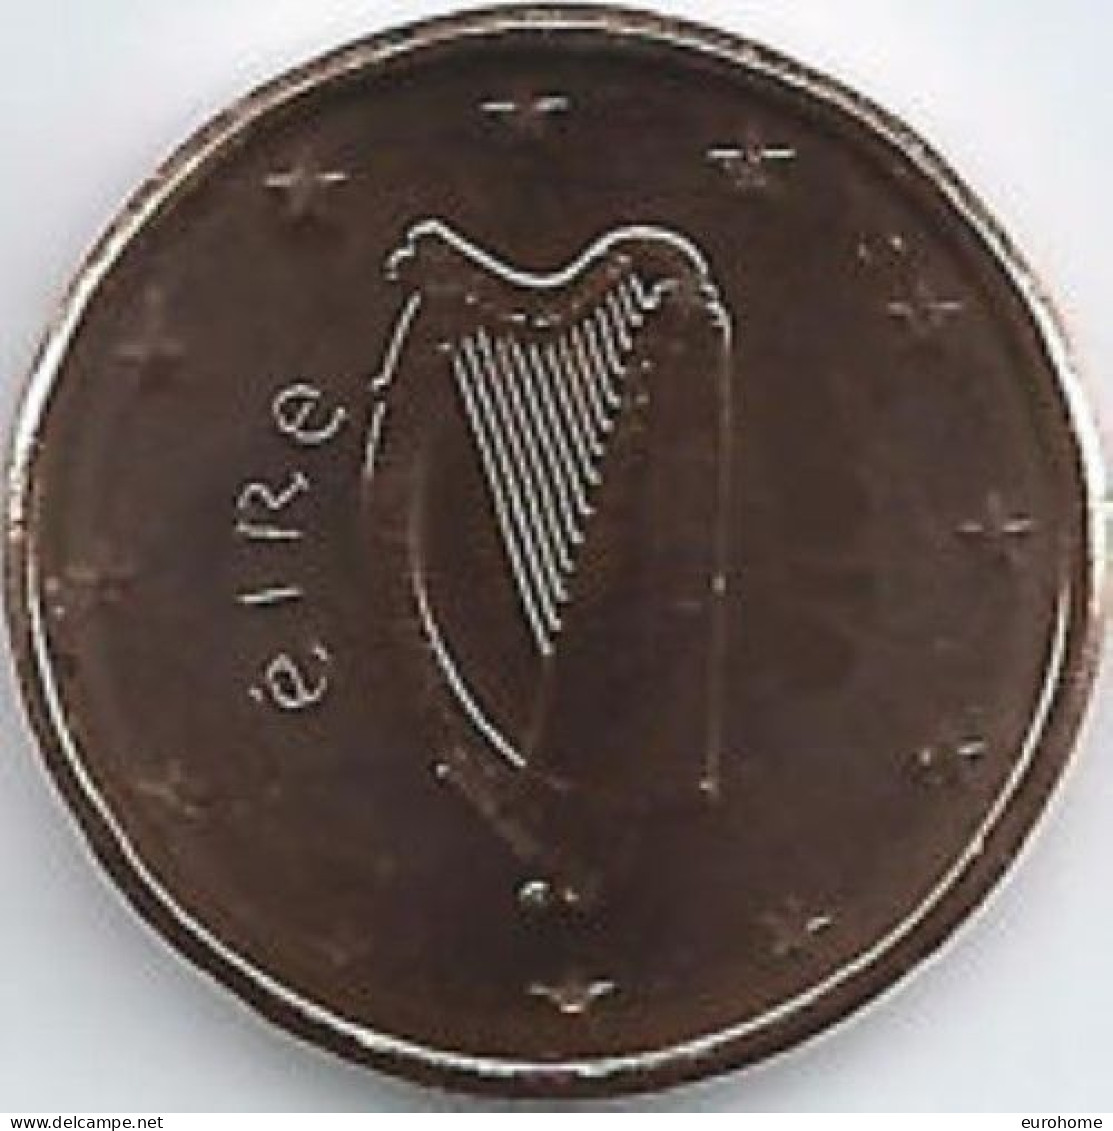 Ierland 2023  5 Cent  UNC Uit De BU  UNC Du Coffret  ZEER ZELDZAAM - EXTREME RARE  5.000 Ex !!! - Irlanda